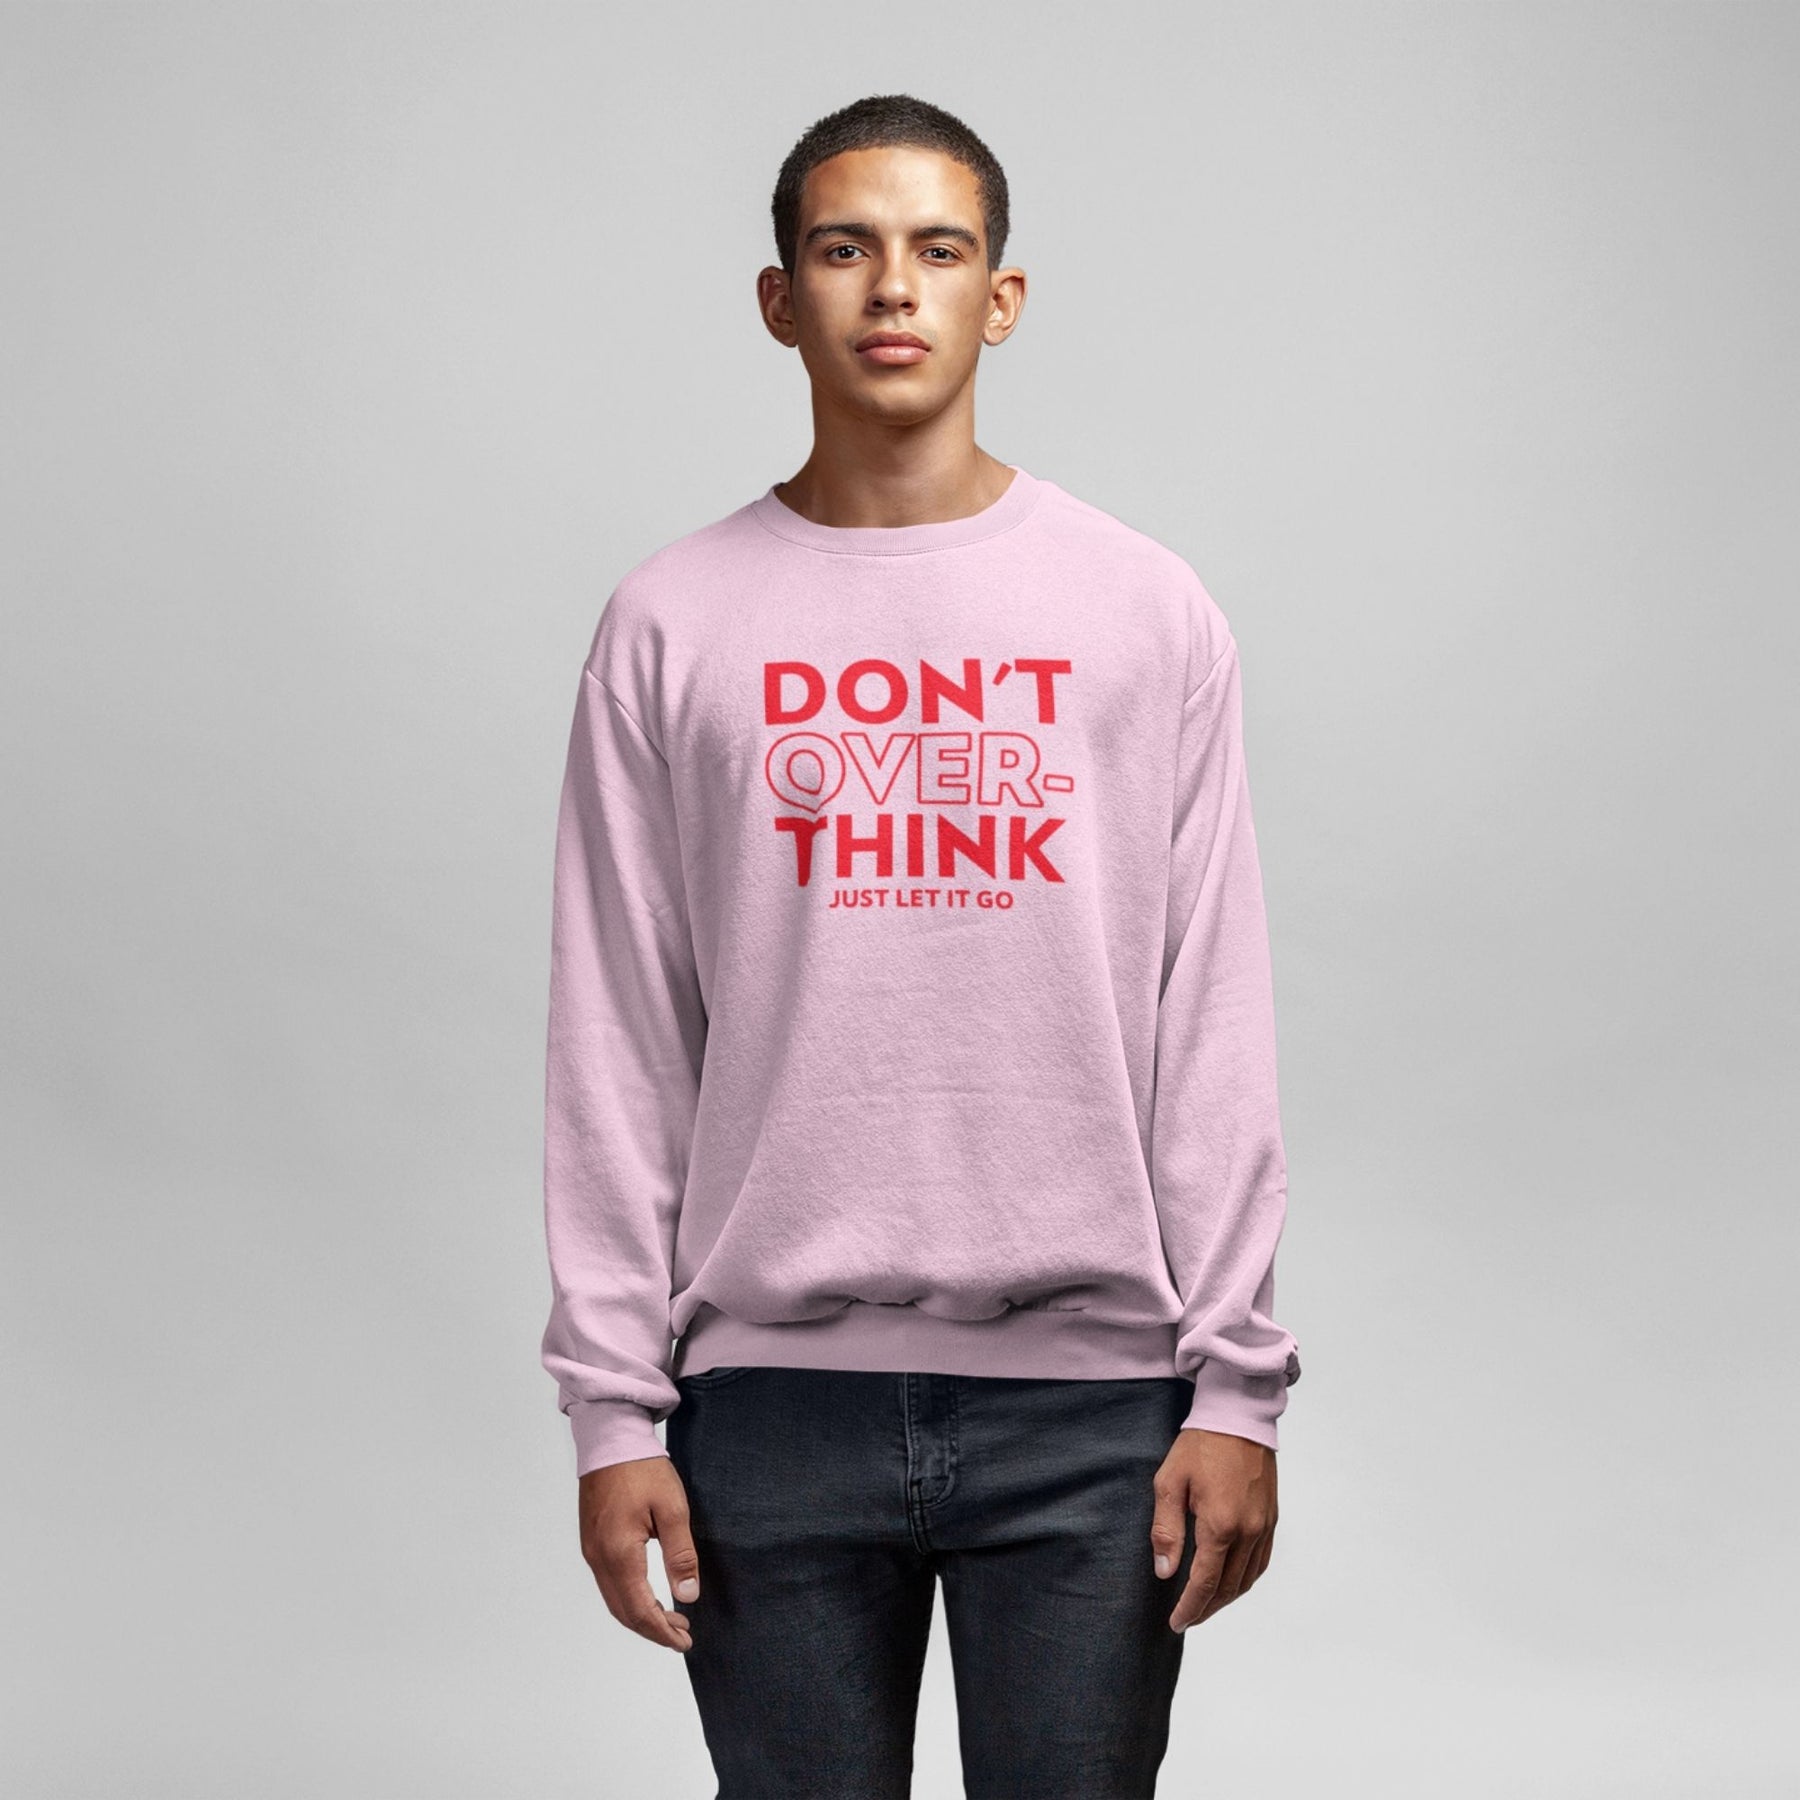 dont-over-think-cotton-printed-unisex-light-pink-men-model-sweatshirt-gogirgit-com